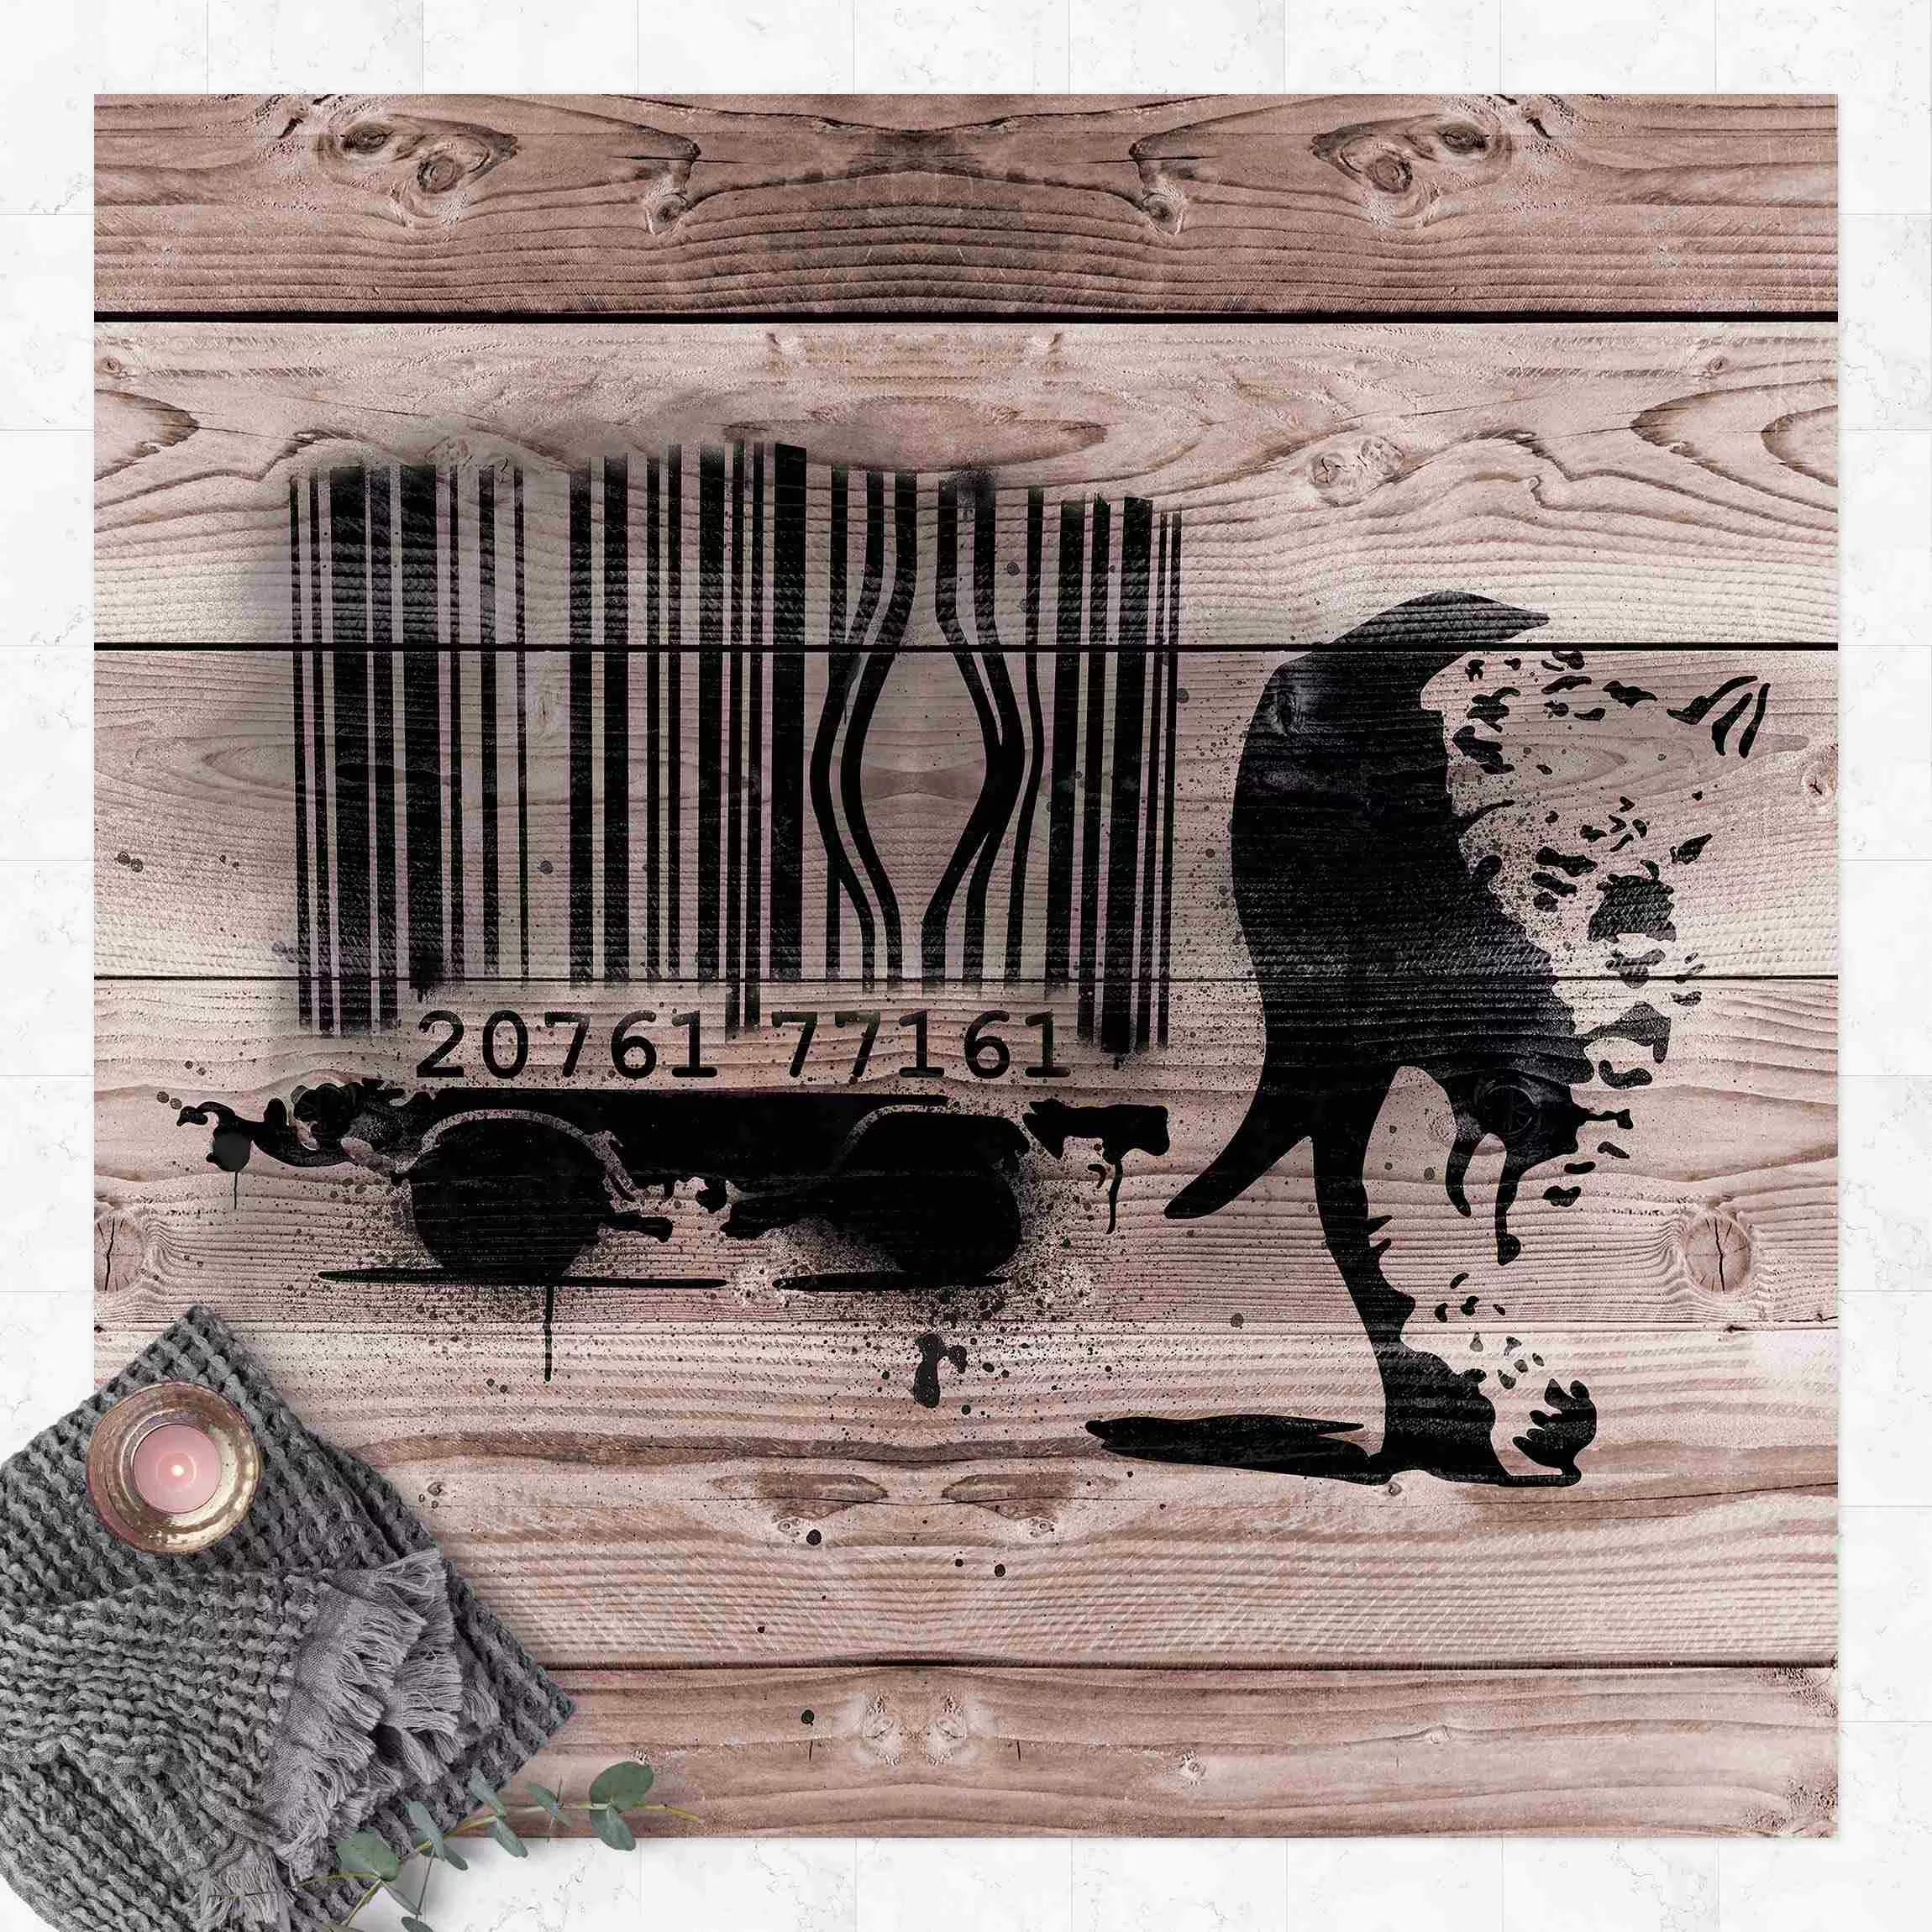 Vinyl-Teppich Barcode Leopard - Brandalised ft. Graffiti by Banksy günstig online kaufen